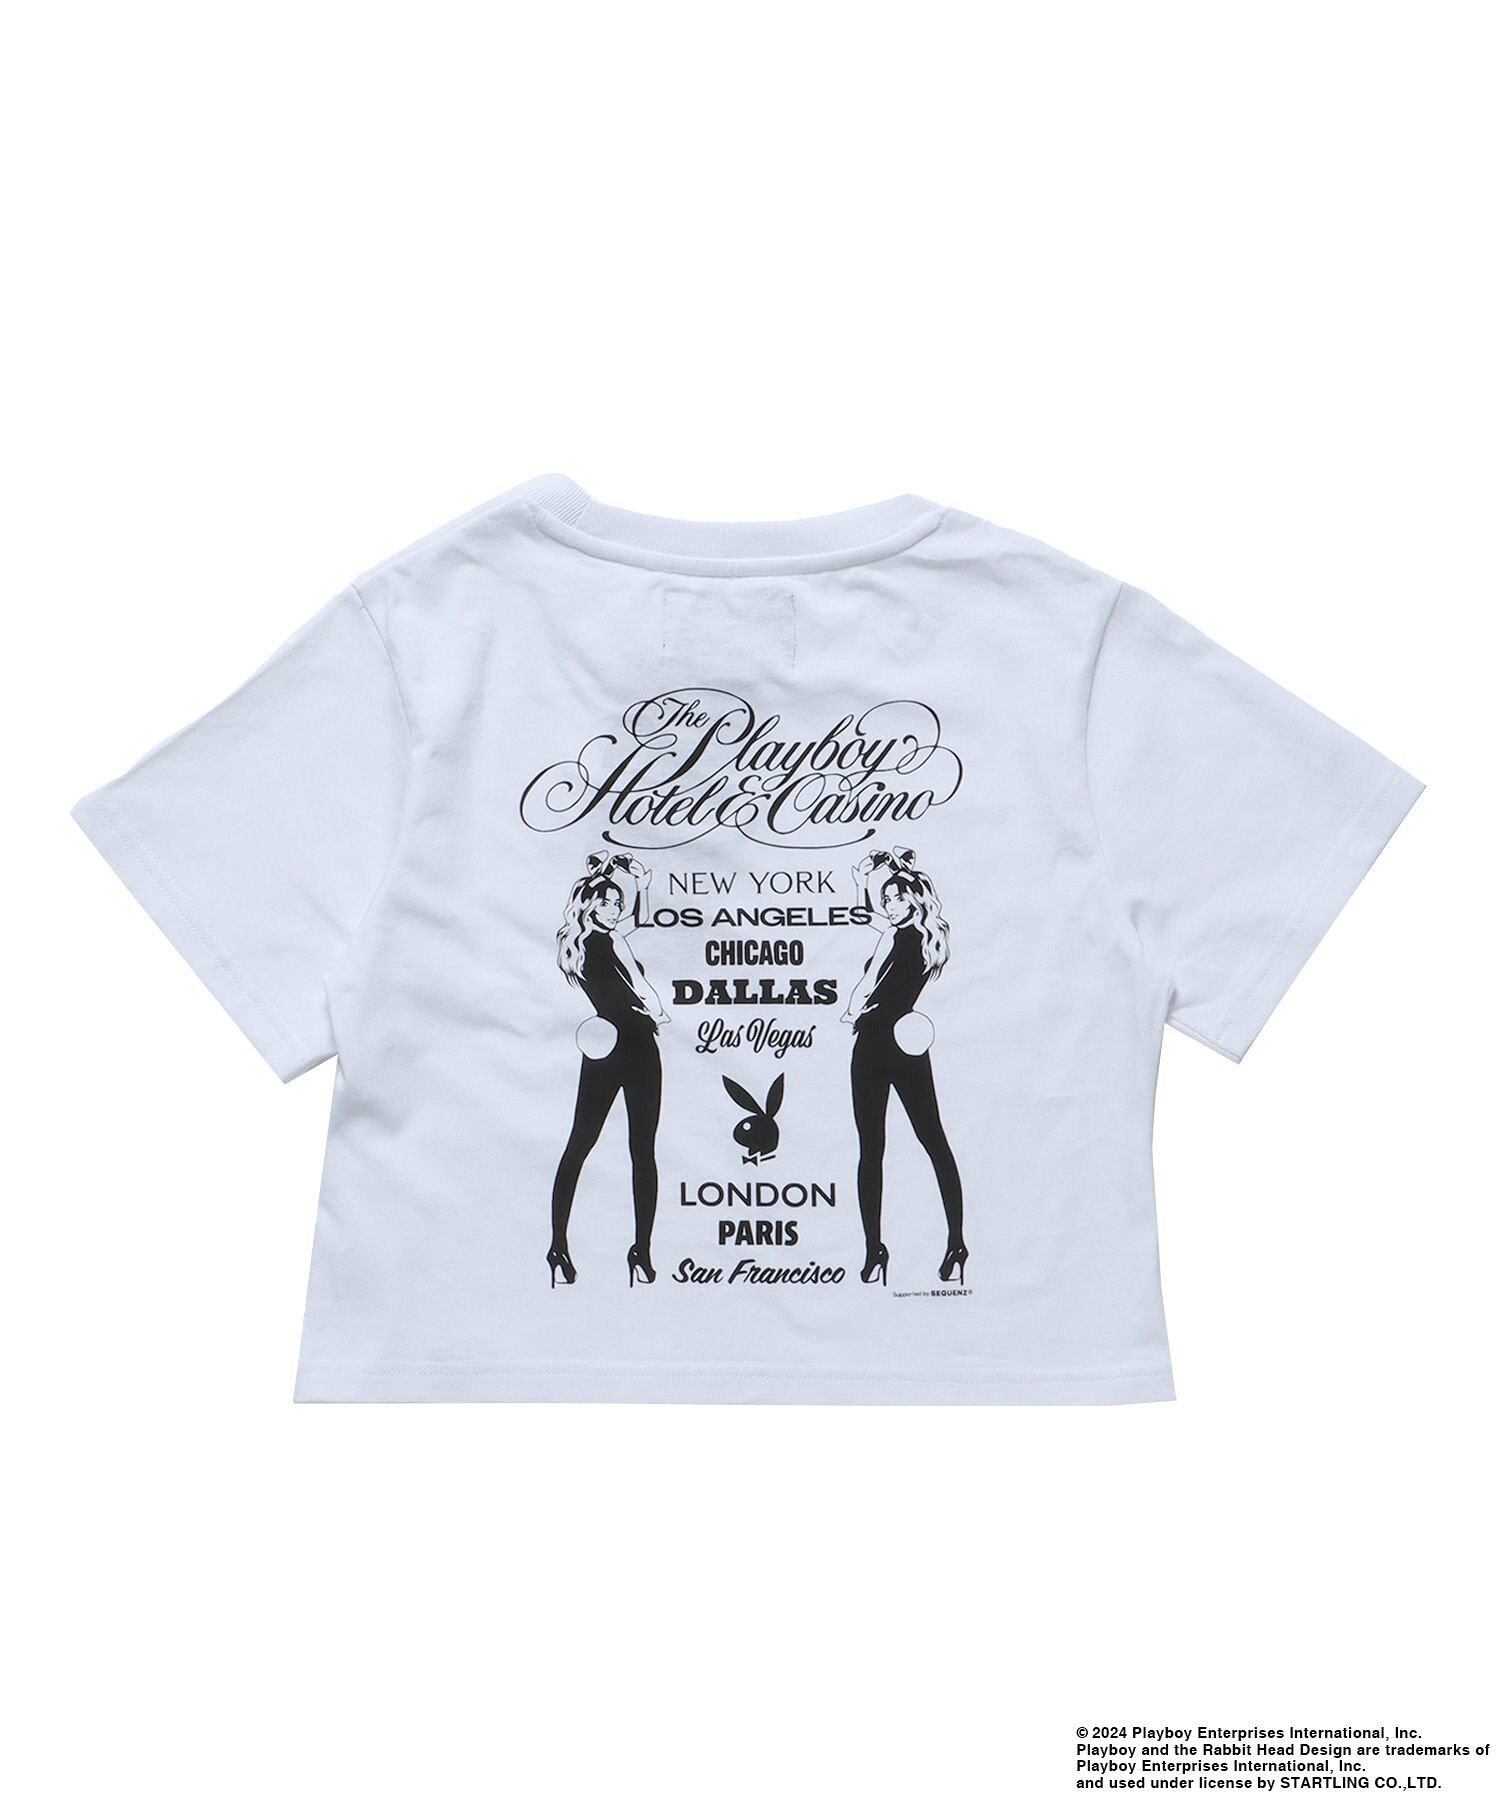 【SEQUENZ】 PLAYBOY BABE TEE / 半袖Tシャツ クルーネック バックプリント ワンポイント ショート丈 短丈 ブランドロゴ